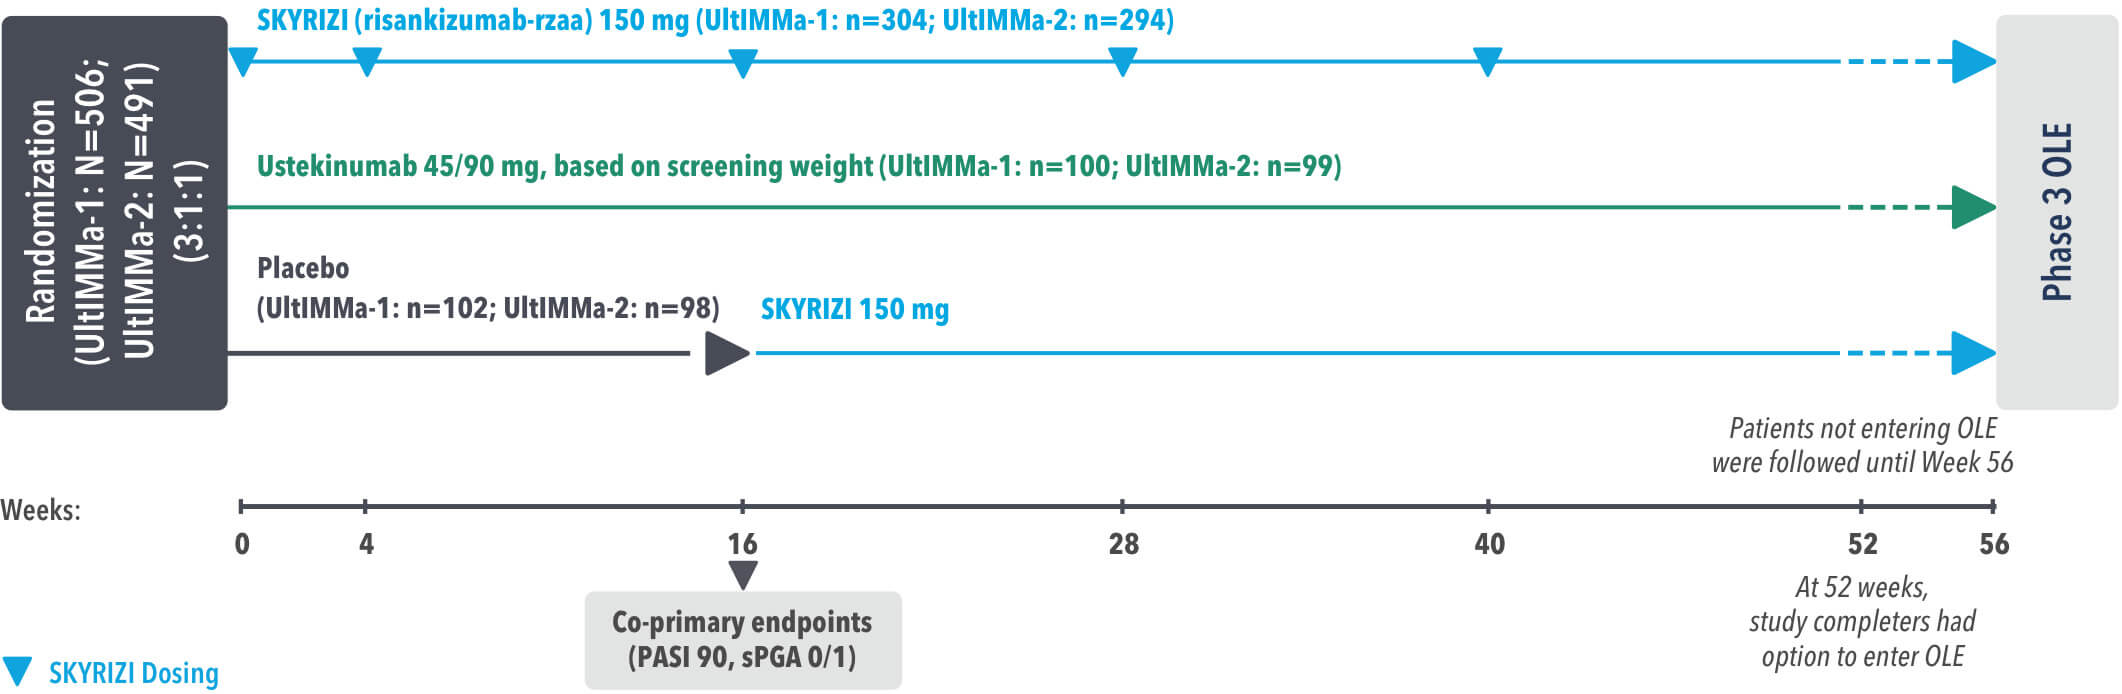 SKYRIZI® Study Design for UltIMMa-1 and UltIMMa-2.